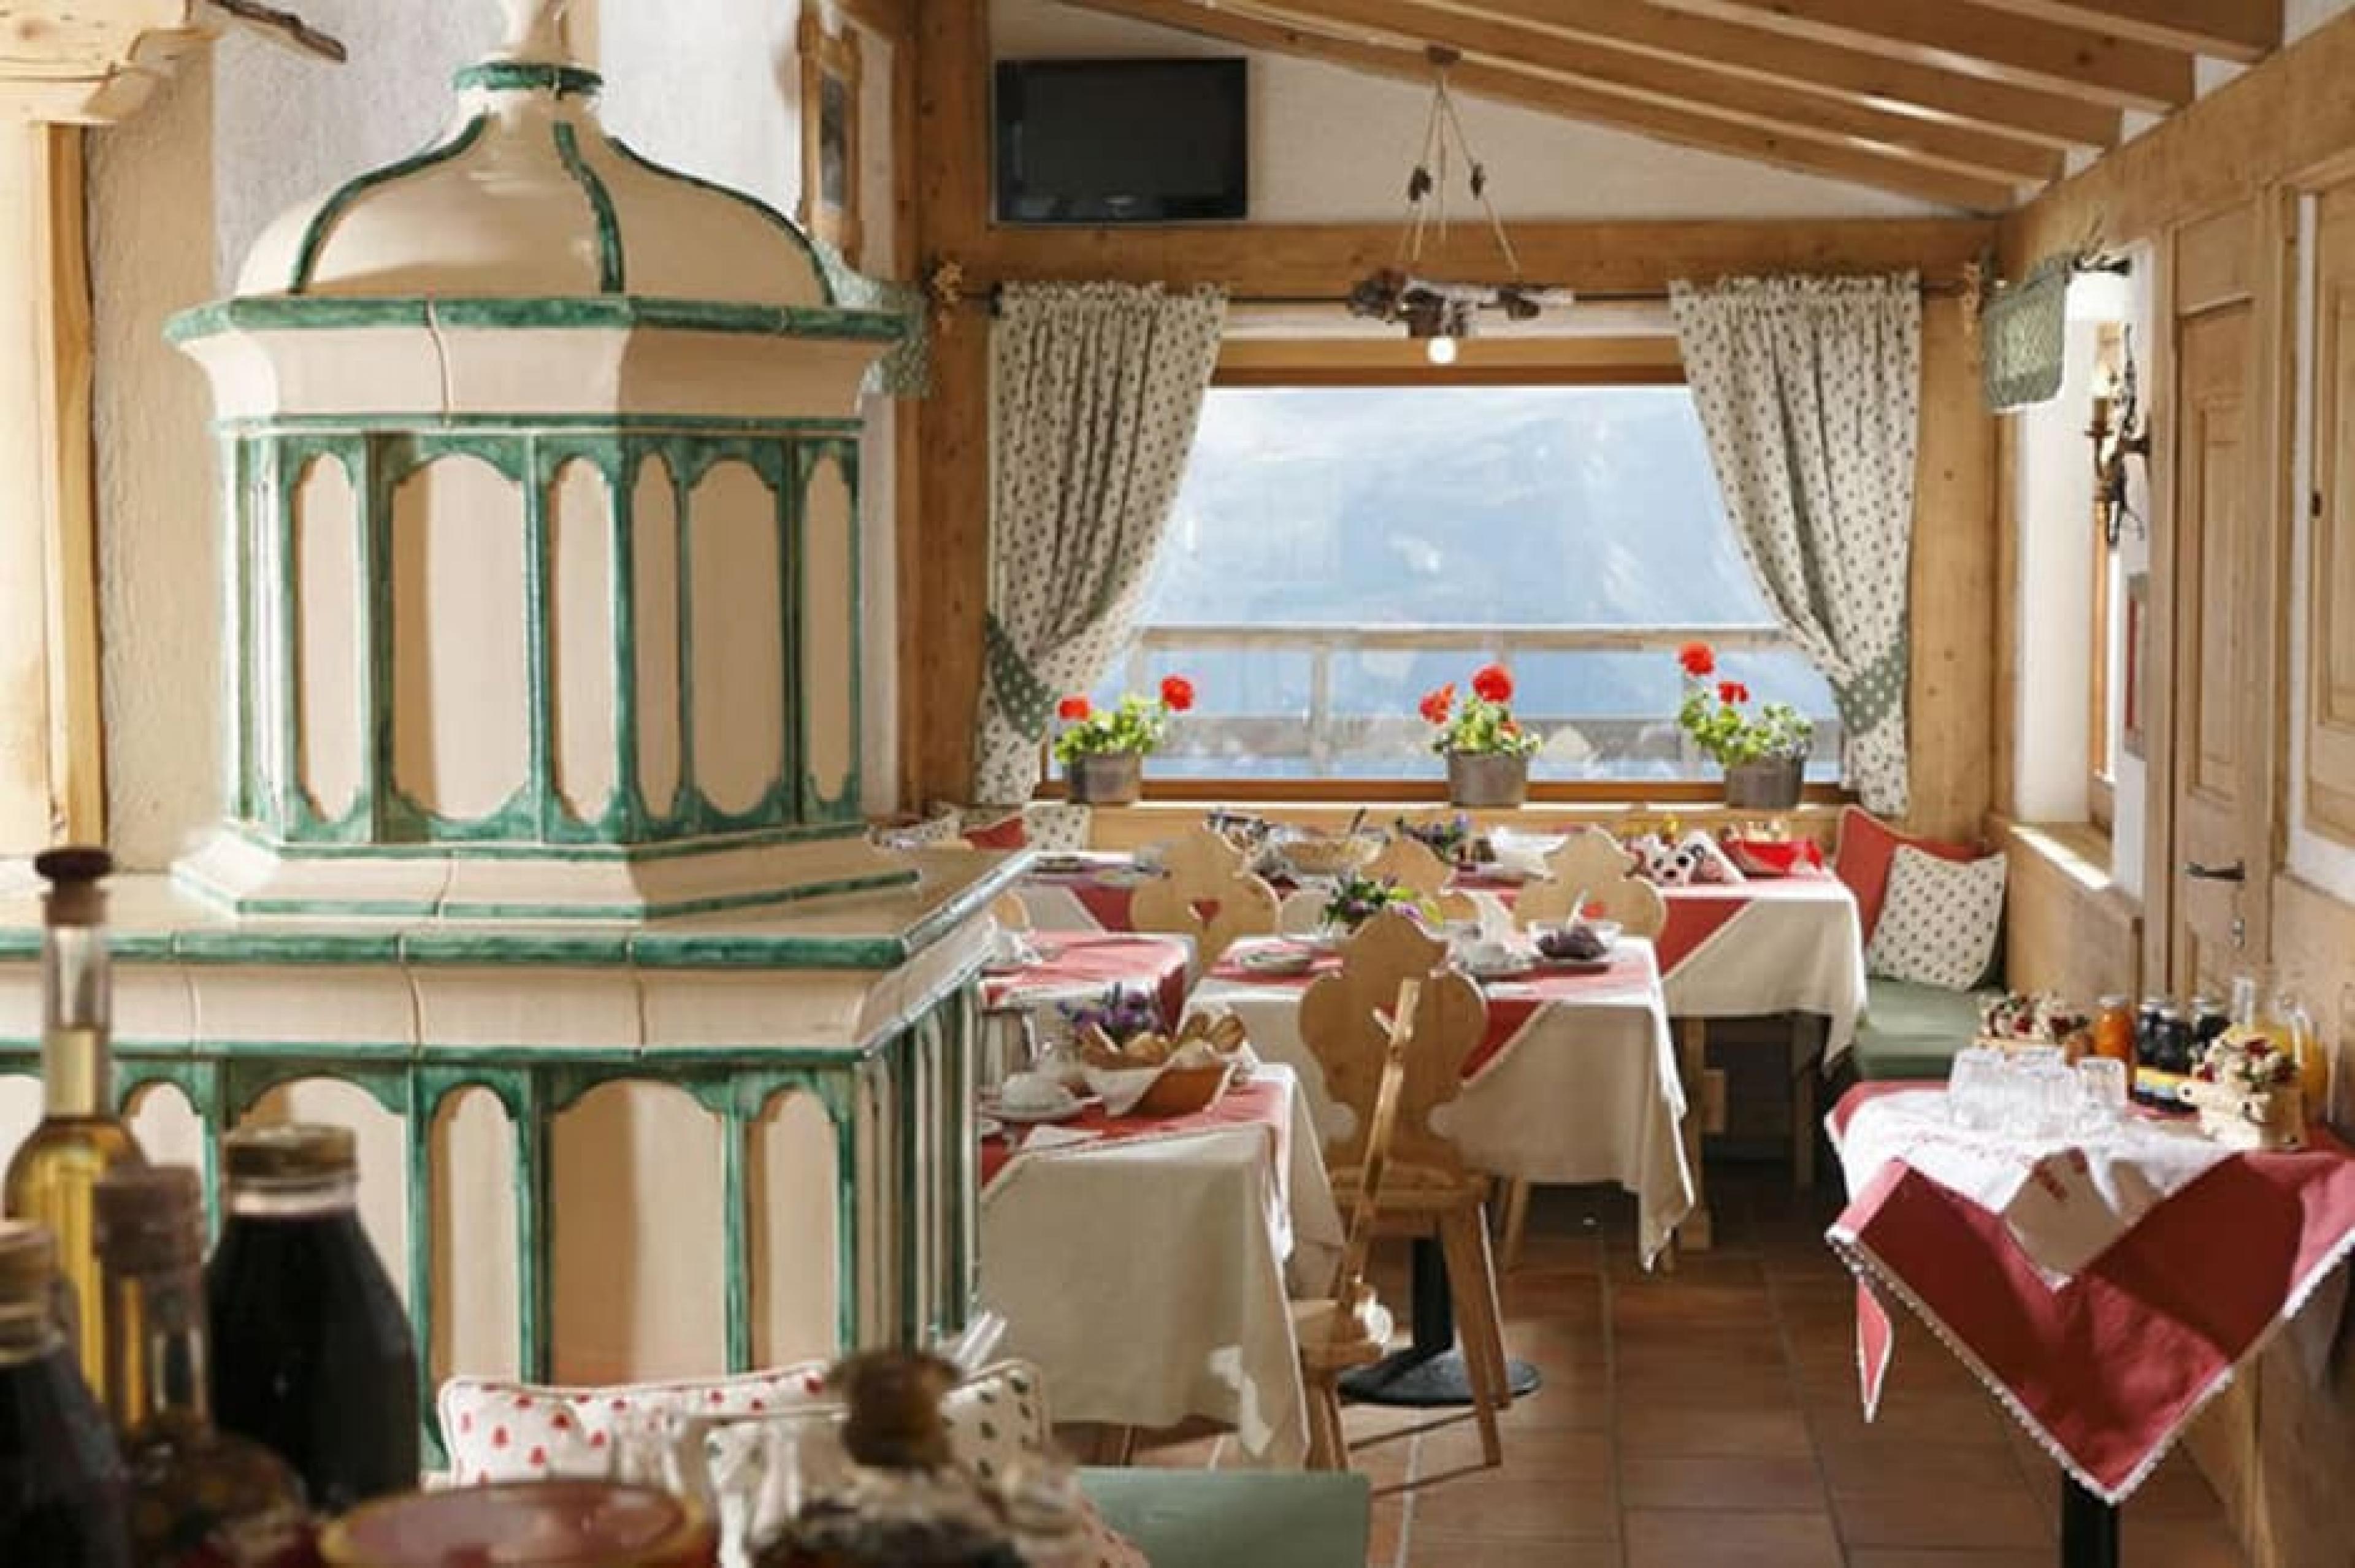 Interiors at Pomedes, Dolomites, Italy